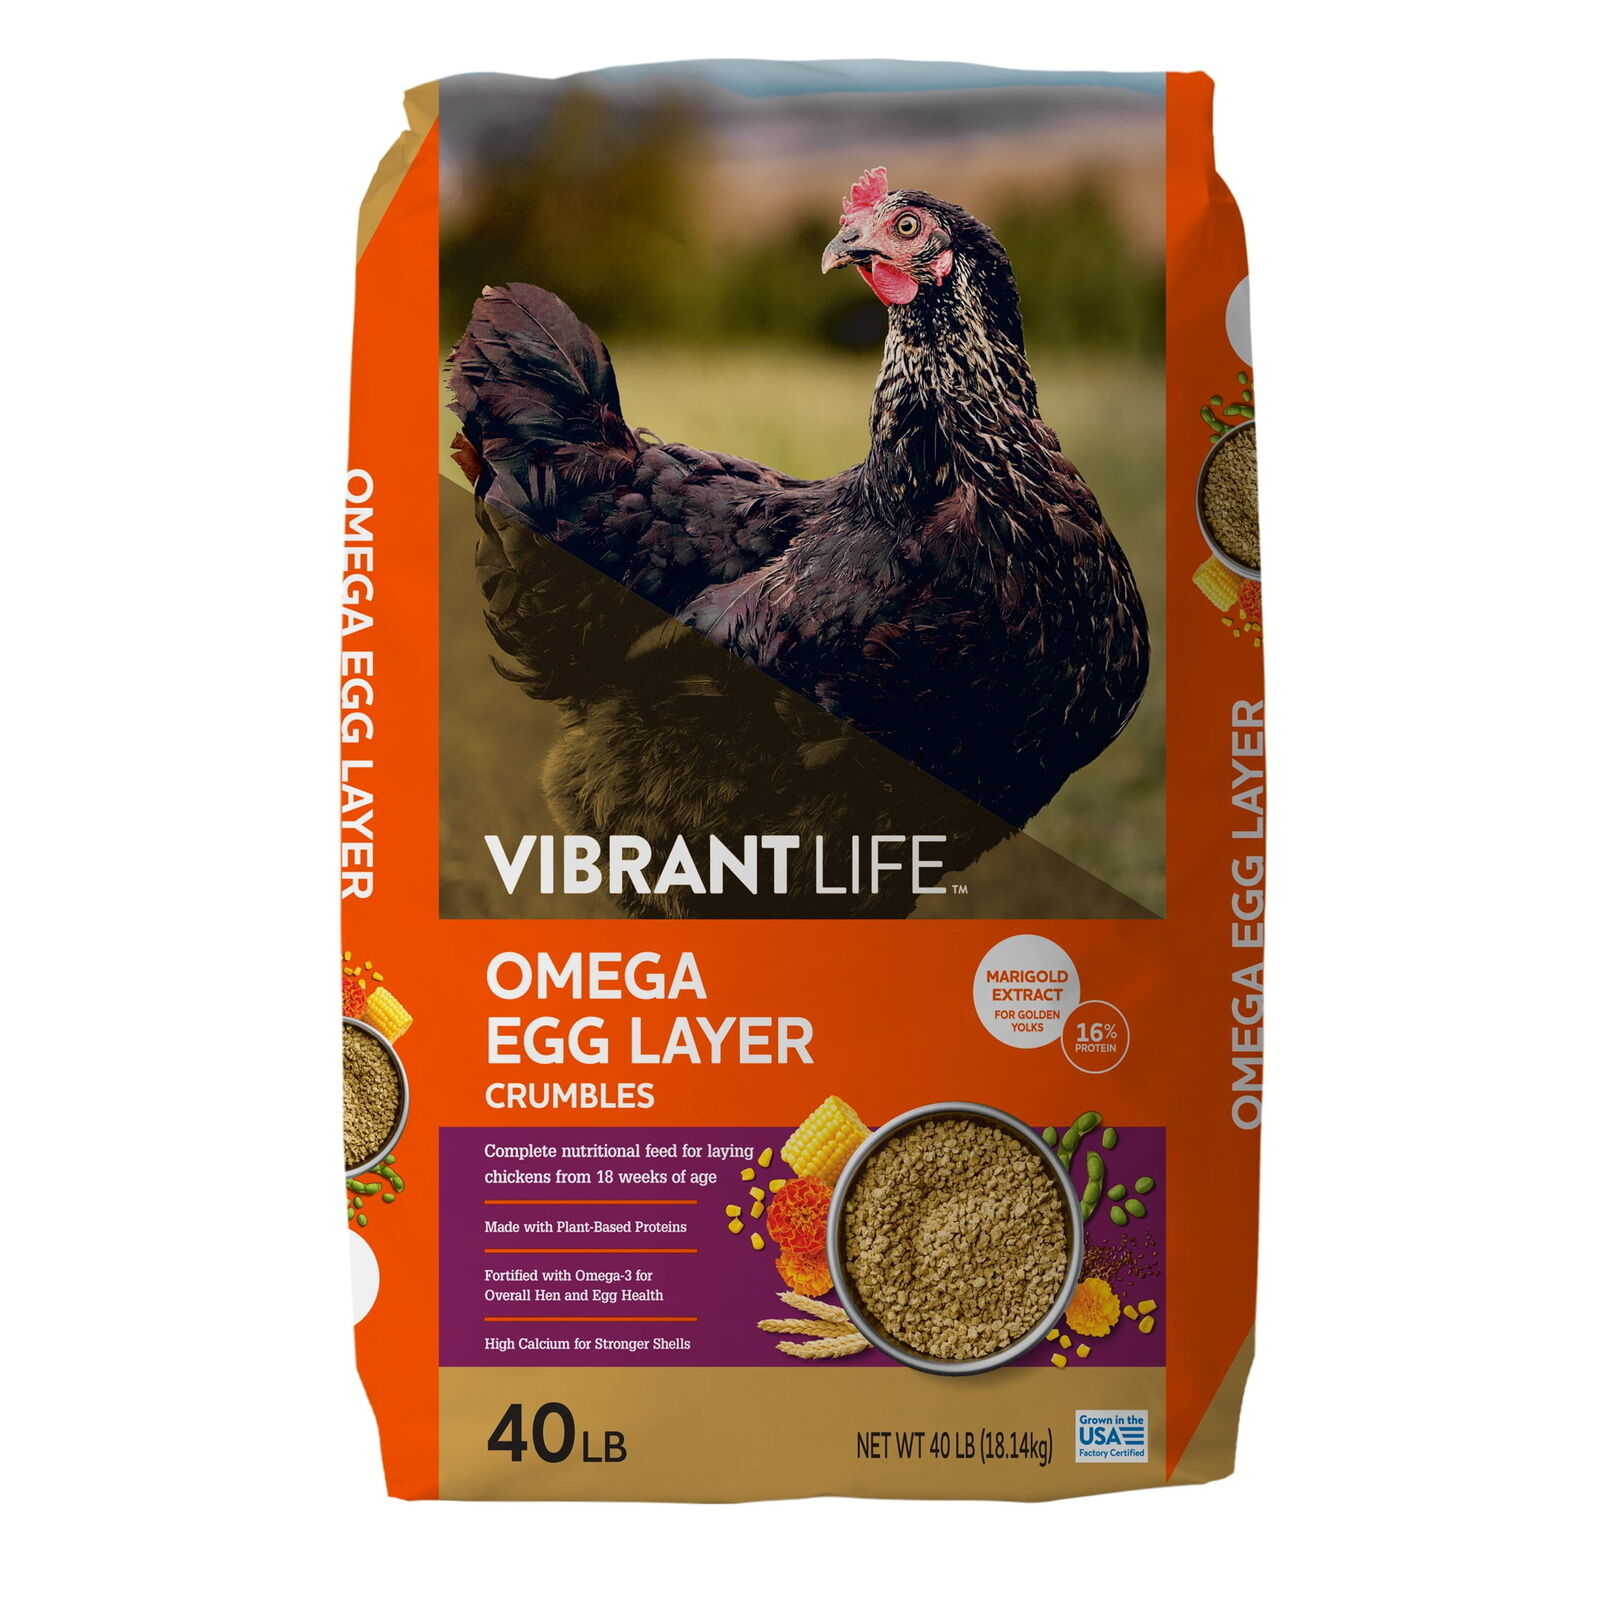 Vibrant Life Omega Egg Layer Crumble 40 lb Bag